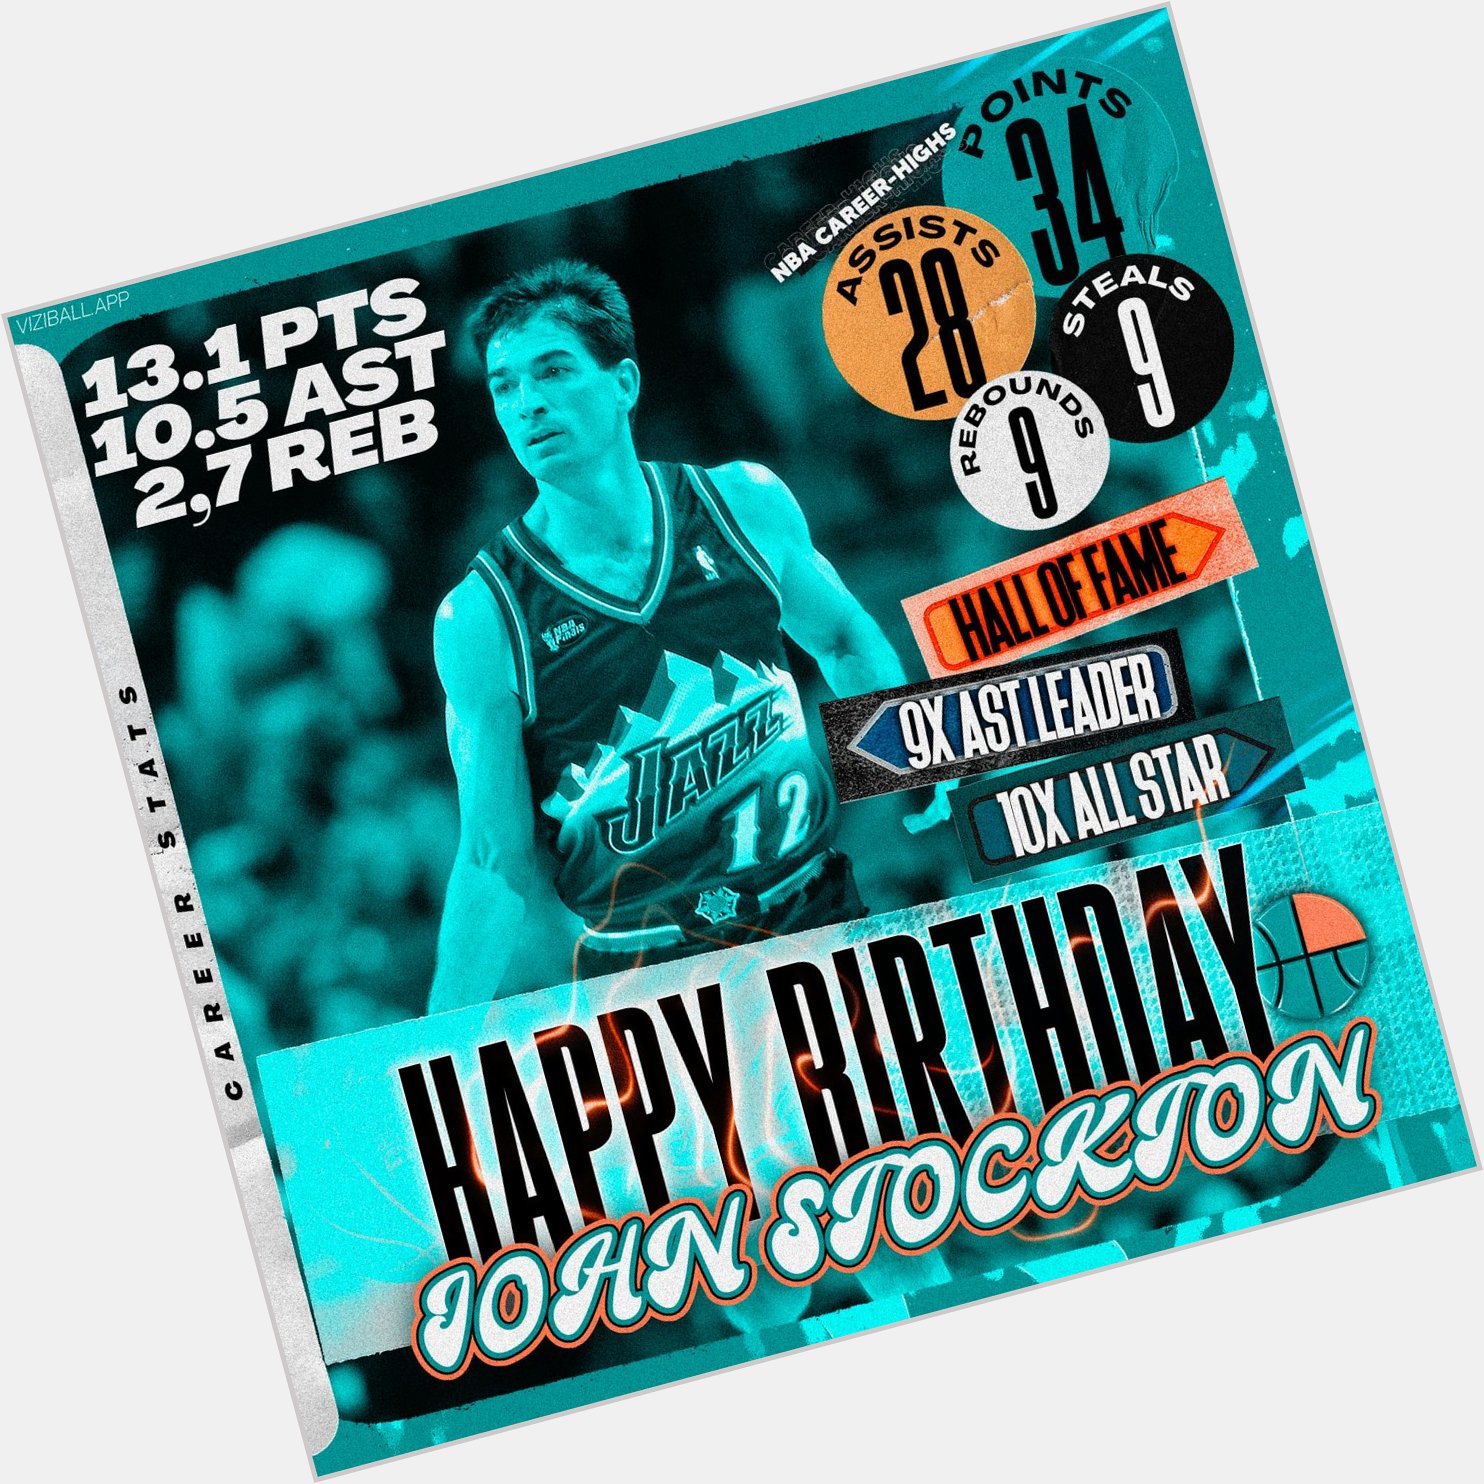 Happy birthday John Stockton! 